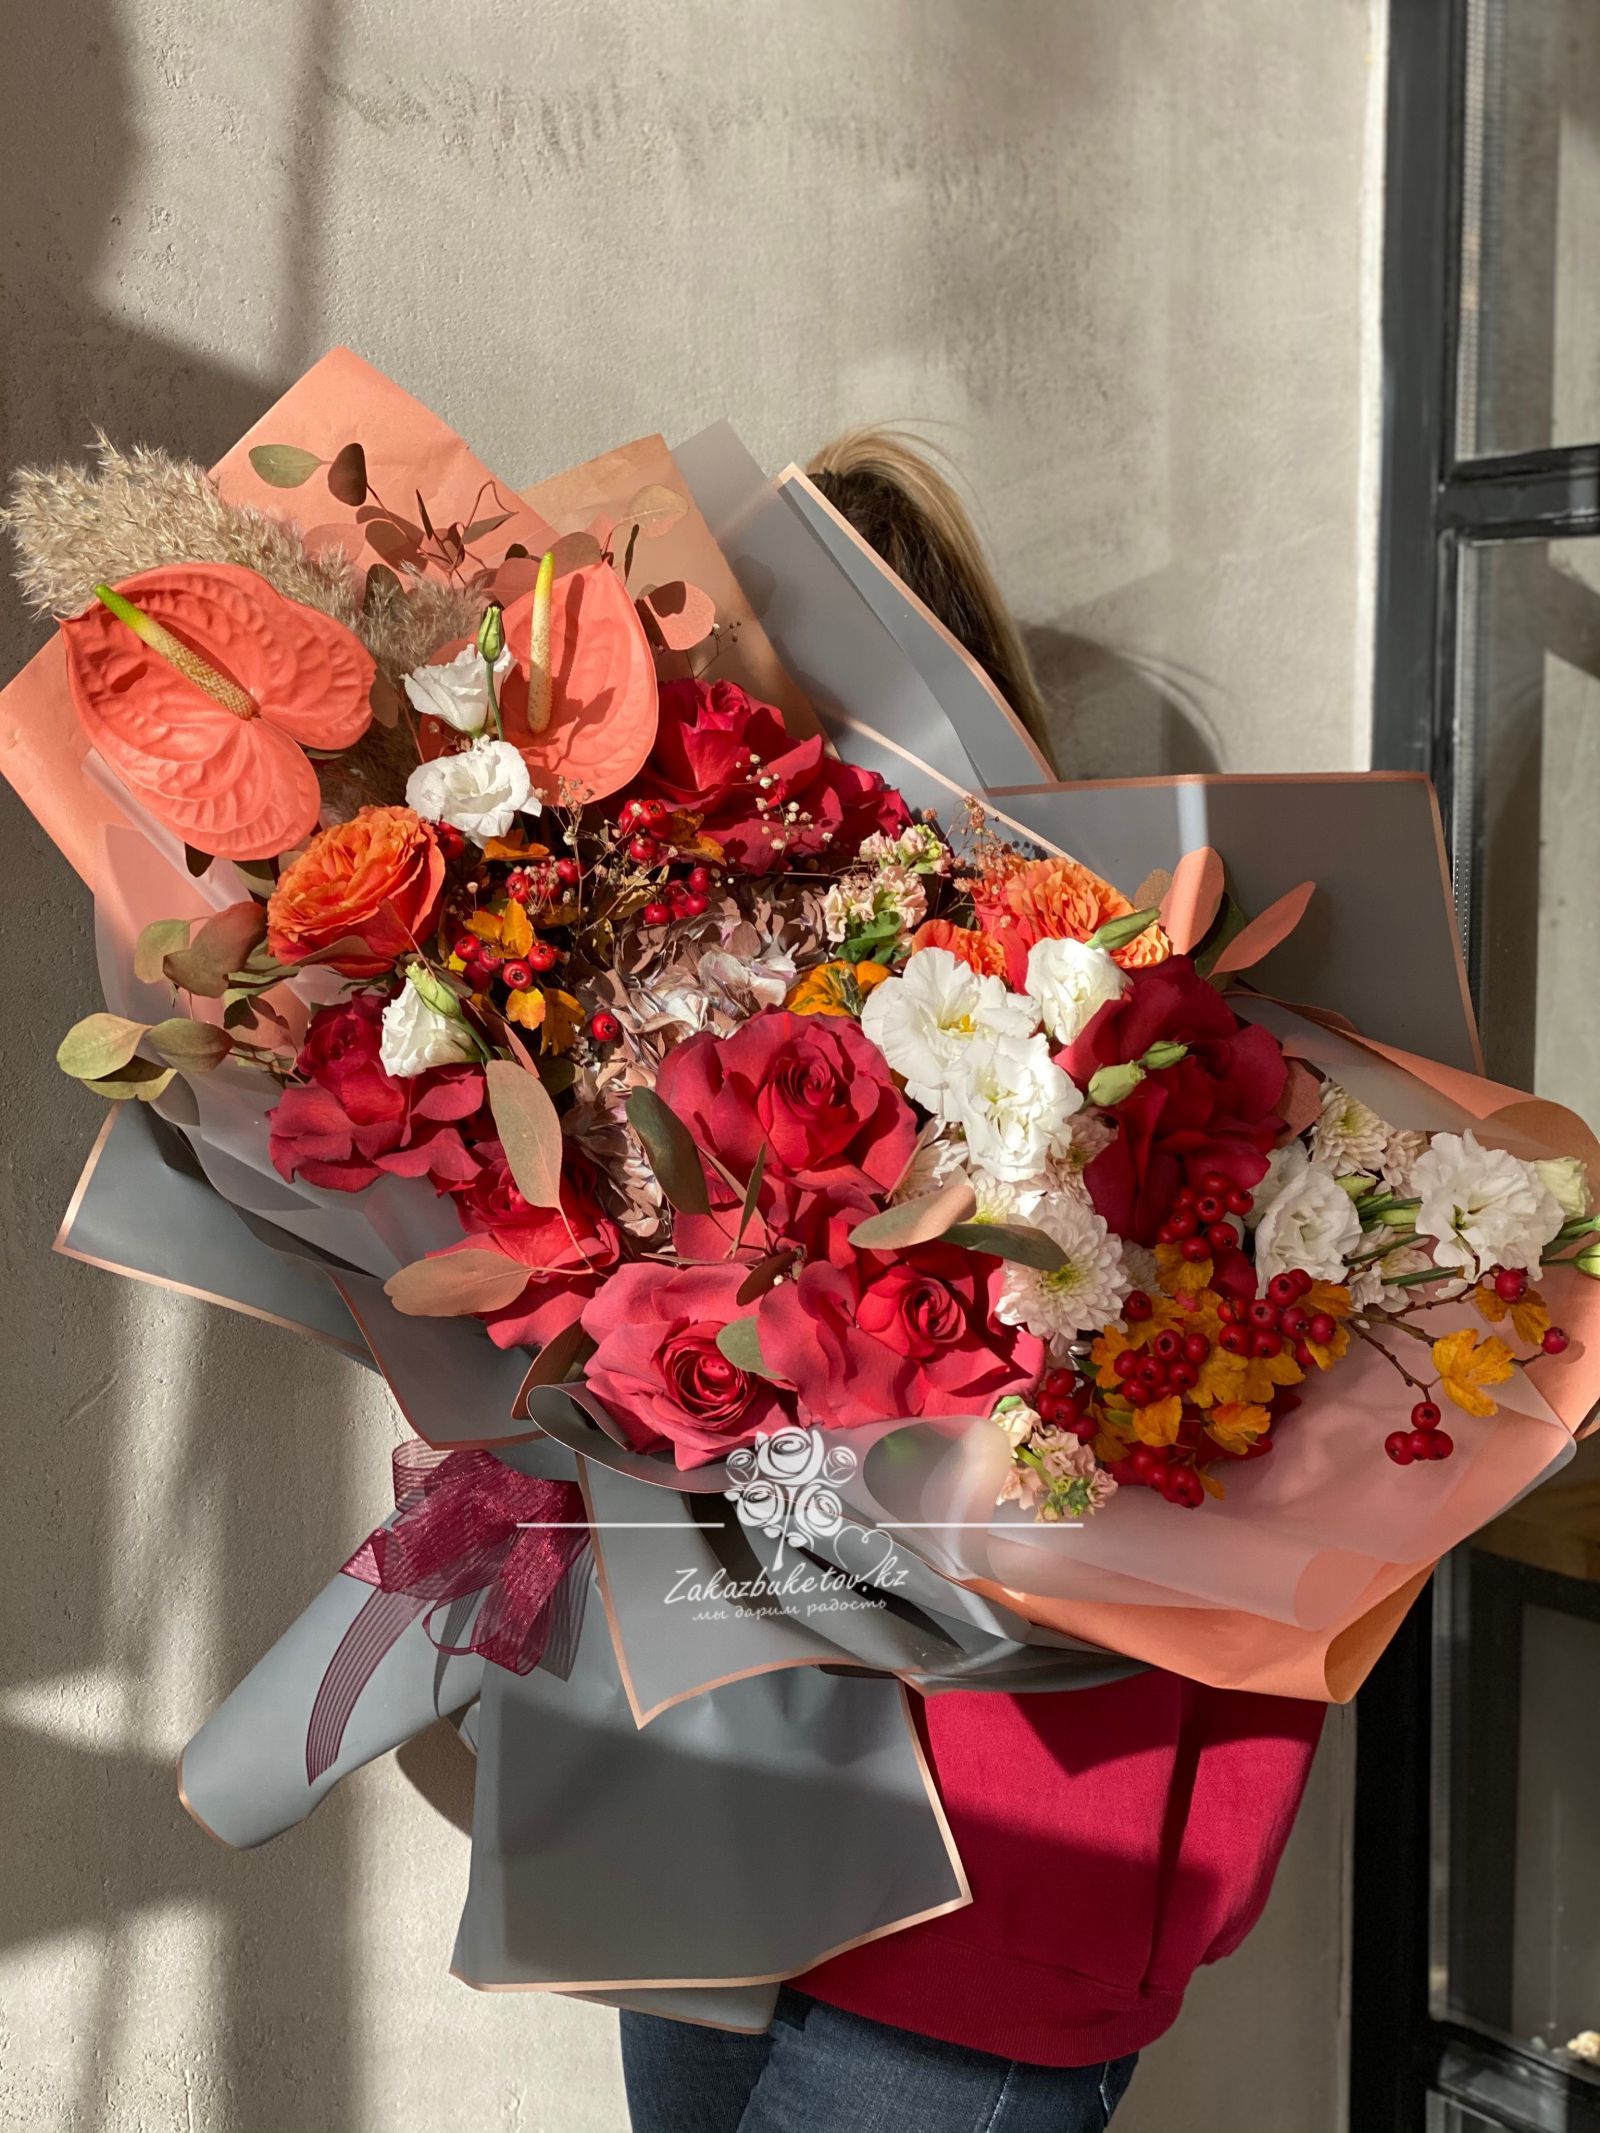 Композиция "Крем-брюле" из роз, хризантем, антуриума и сухоцветов